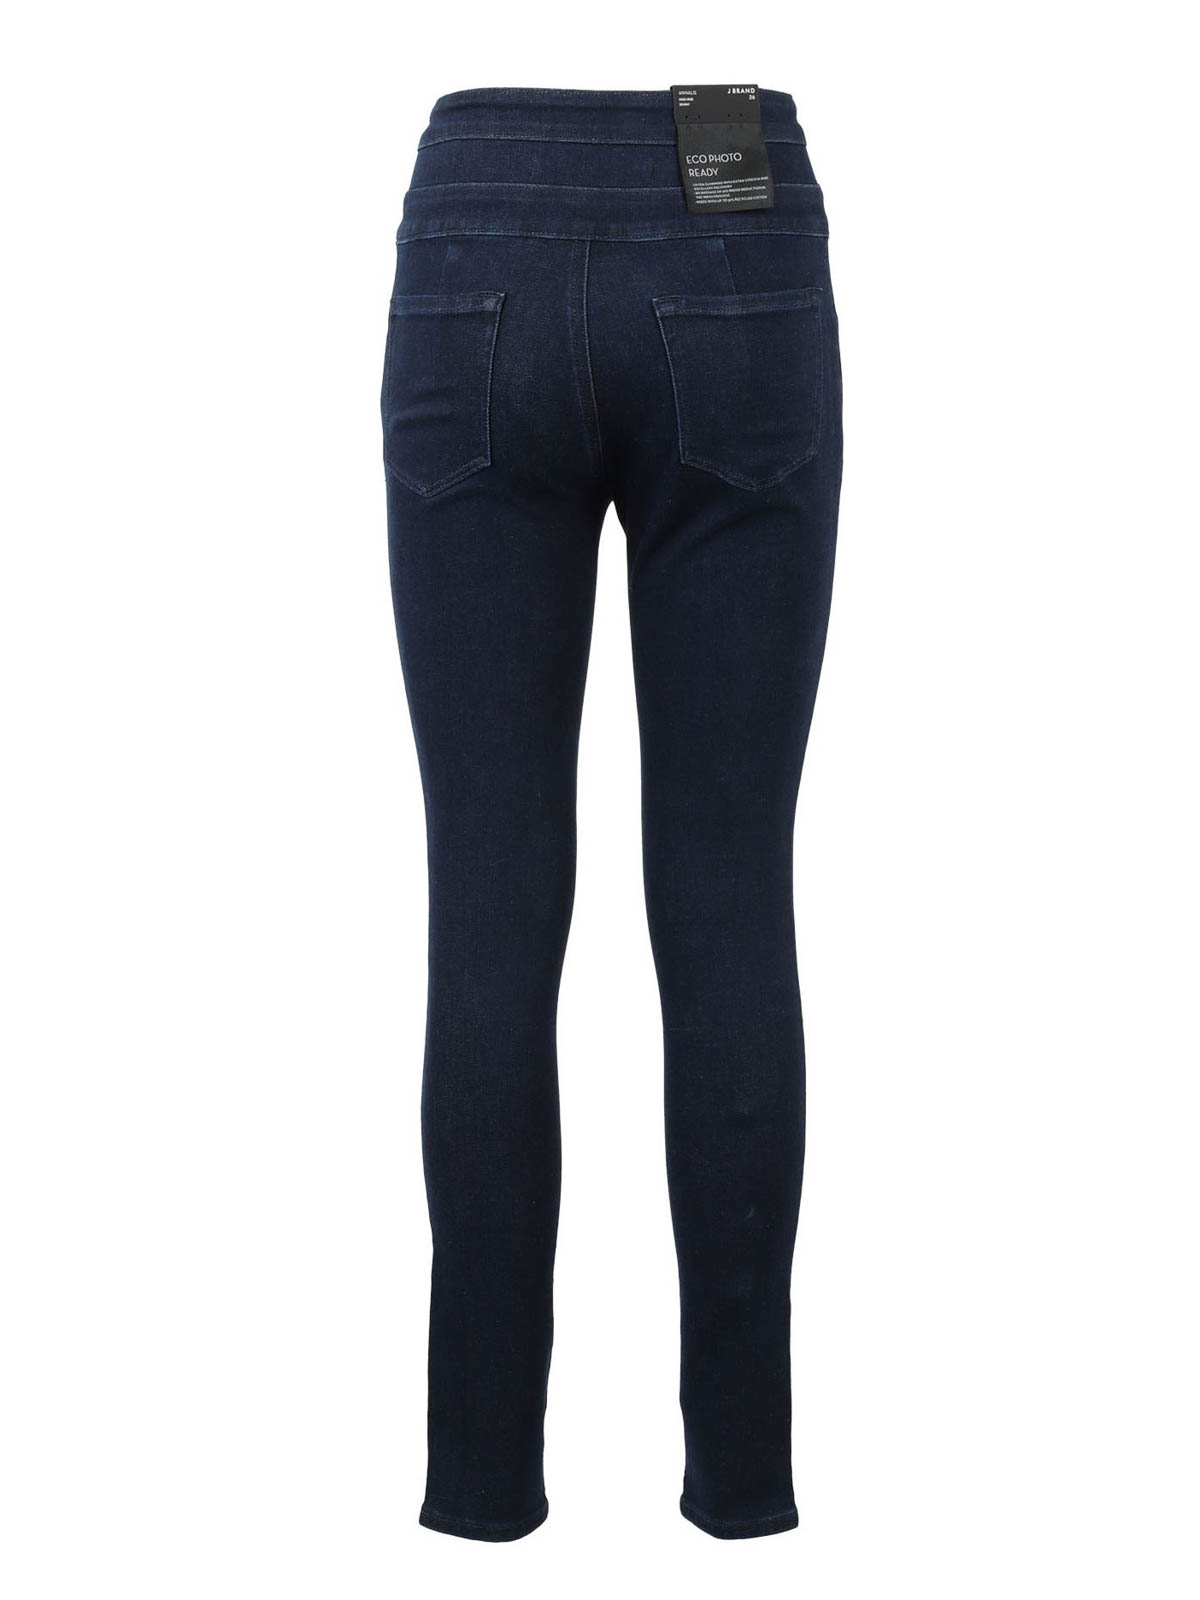 Skinny jeans J Brand - Annalie jeans - JB003106J1718